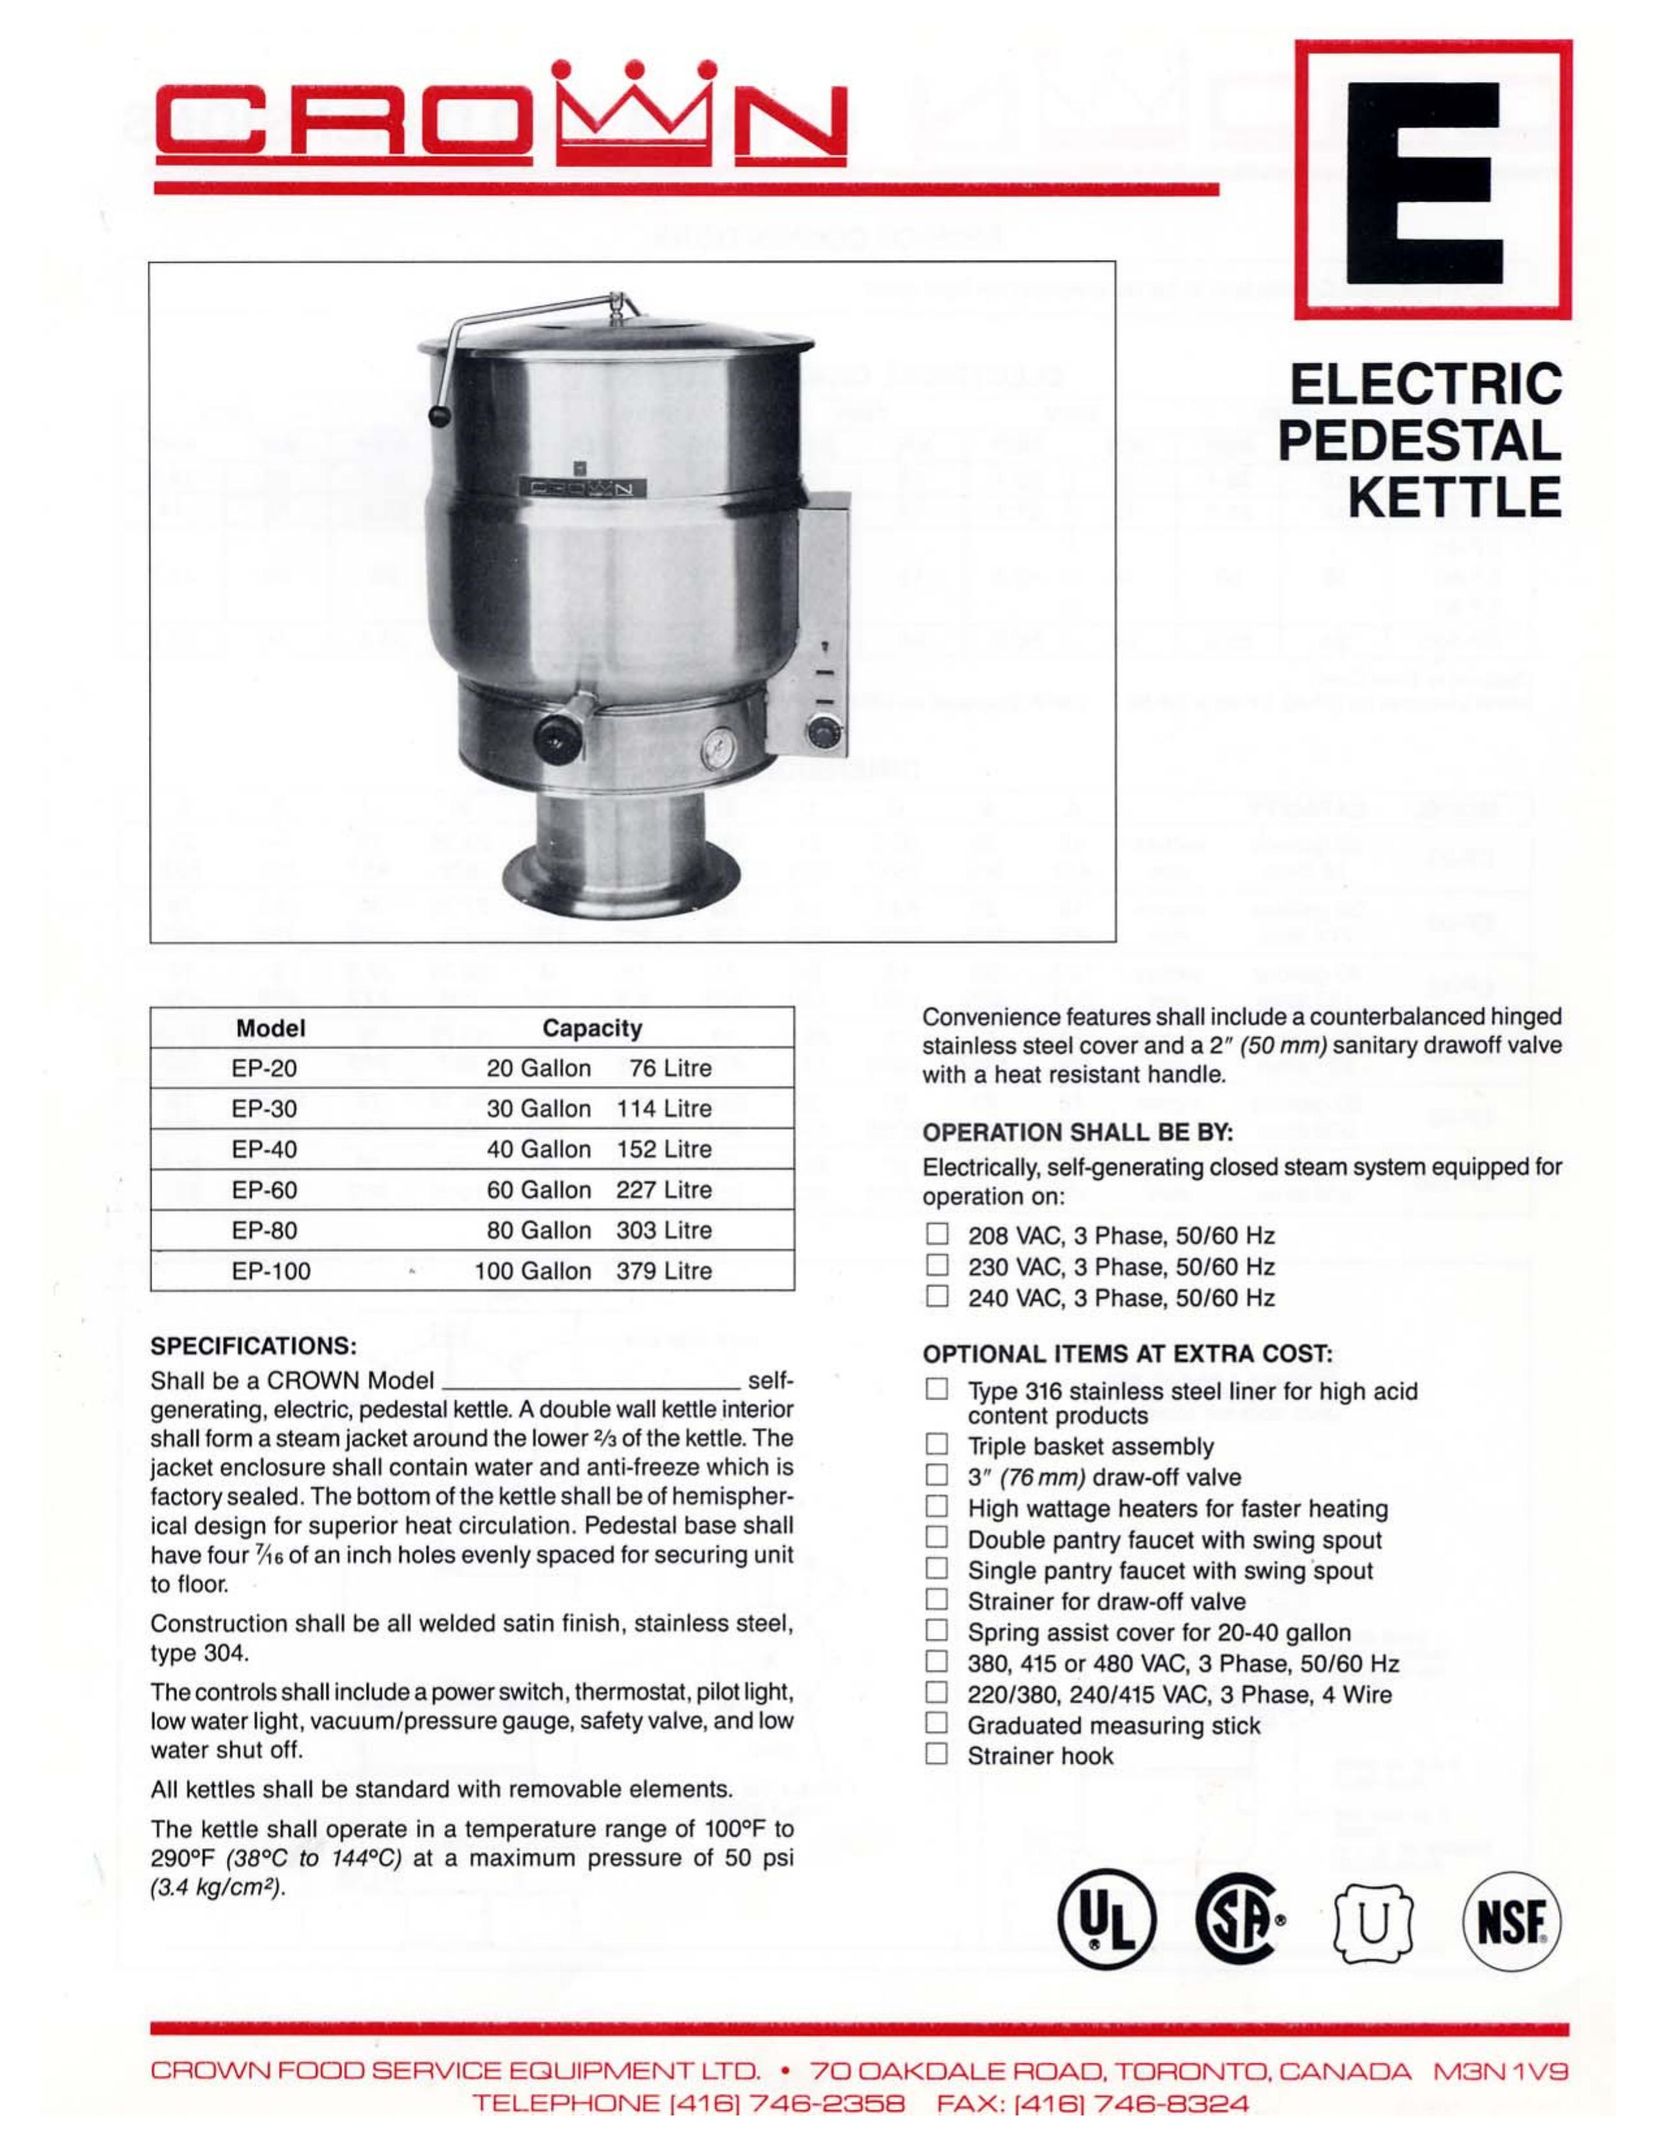 Crown Equipment EP-80 Hot Beverage Maker User Manual